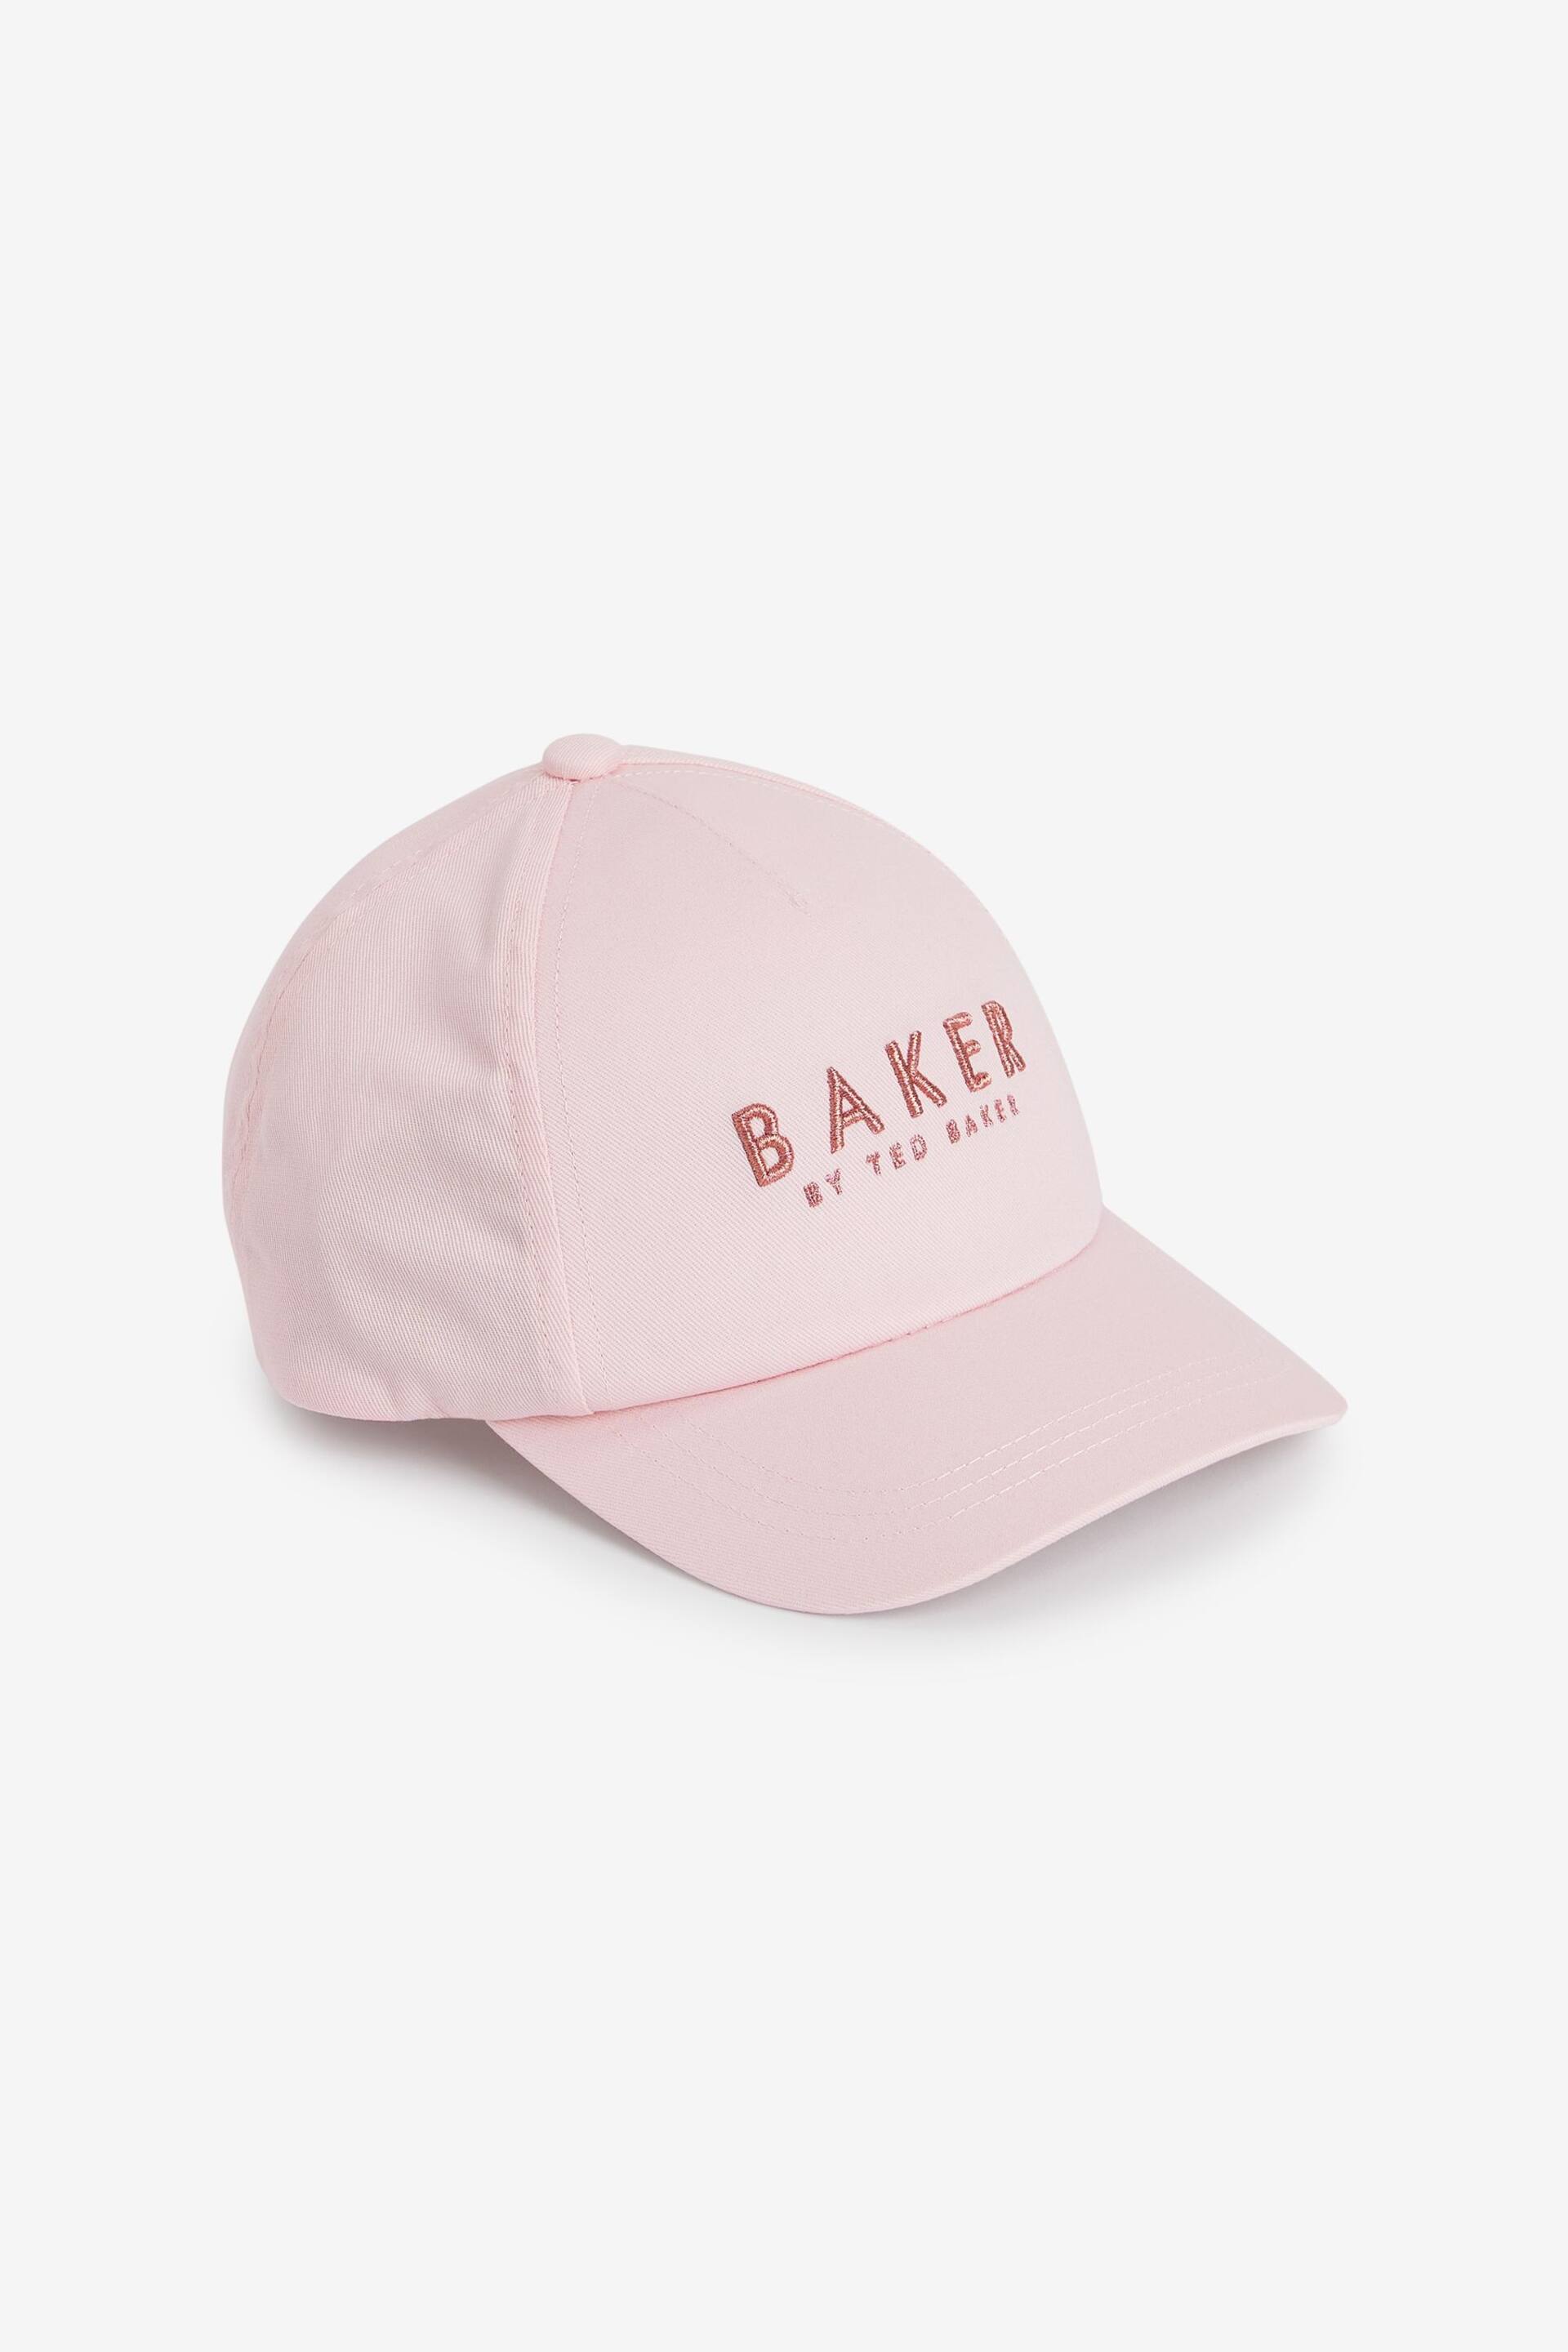 Baker by Ted Baker Girls Pink Twill Baseball Cap - Image 1 of 5